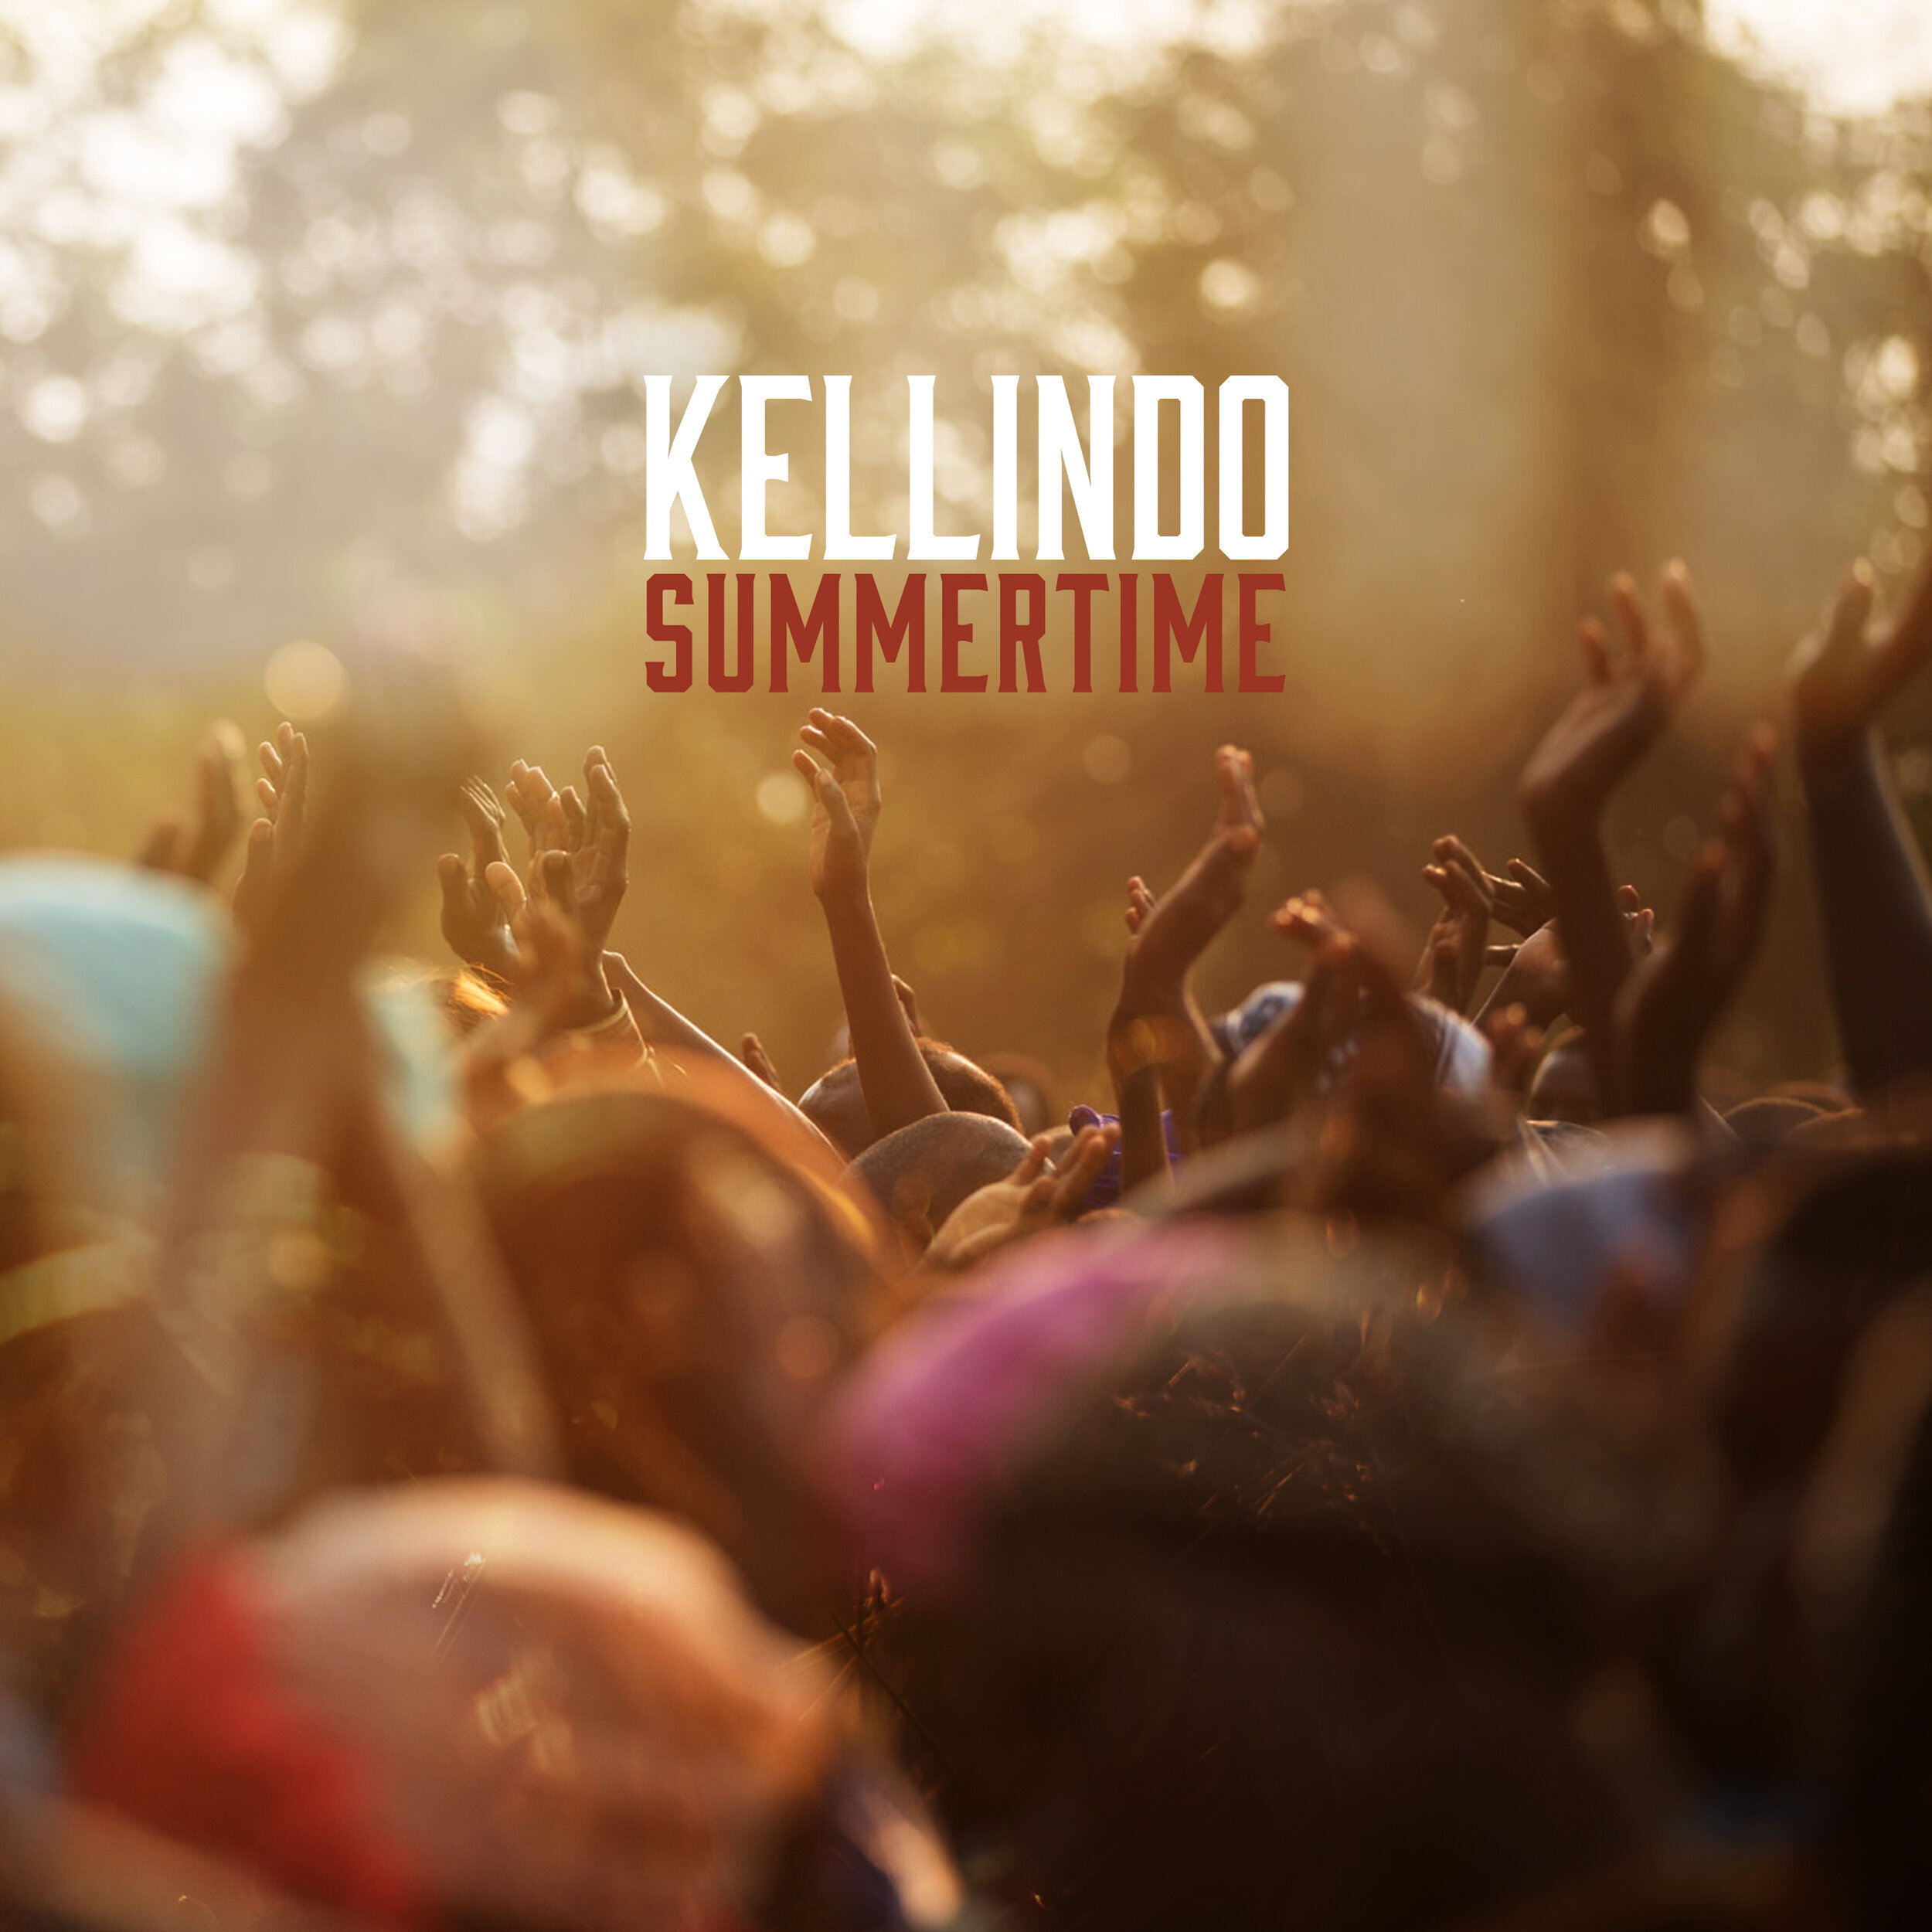 Kellindo-Summertime-coverA-1.jpg